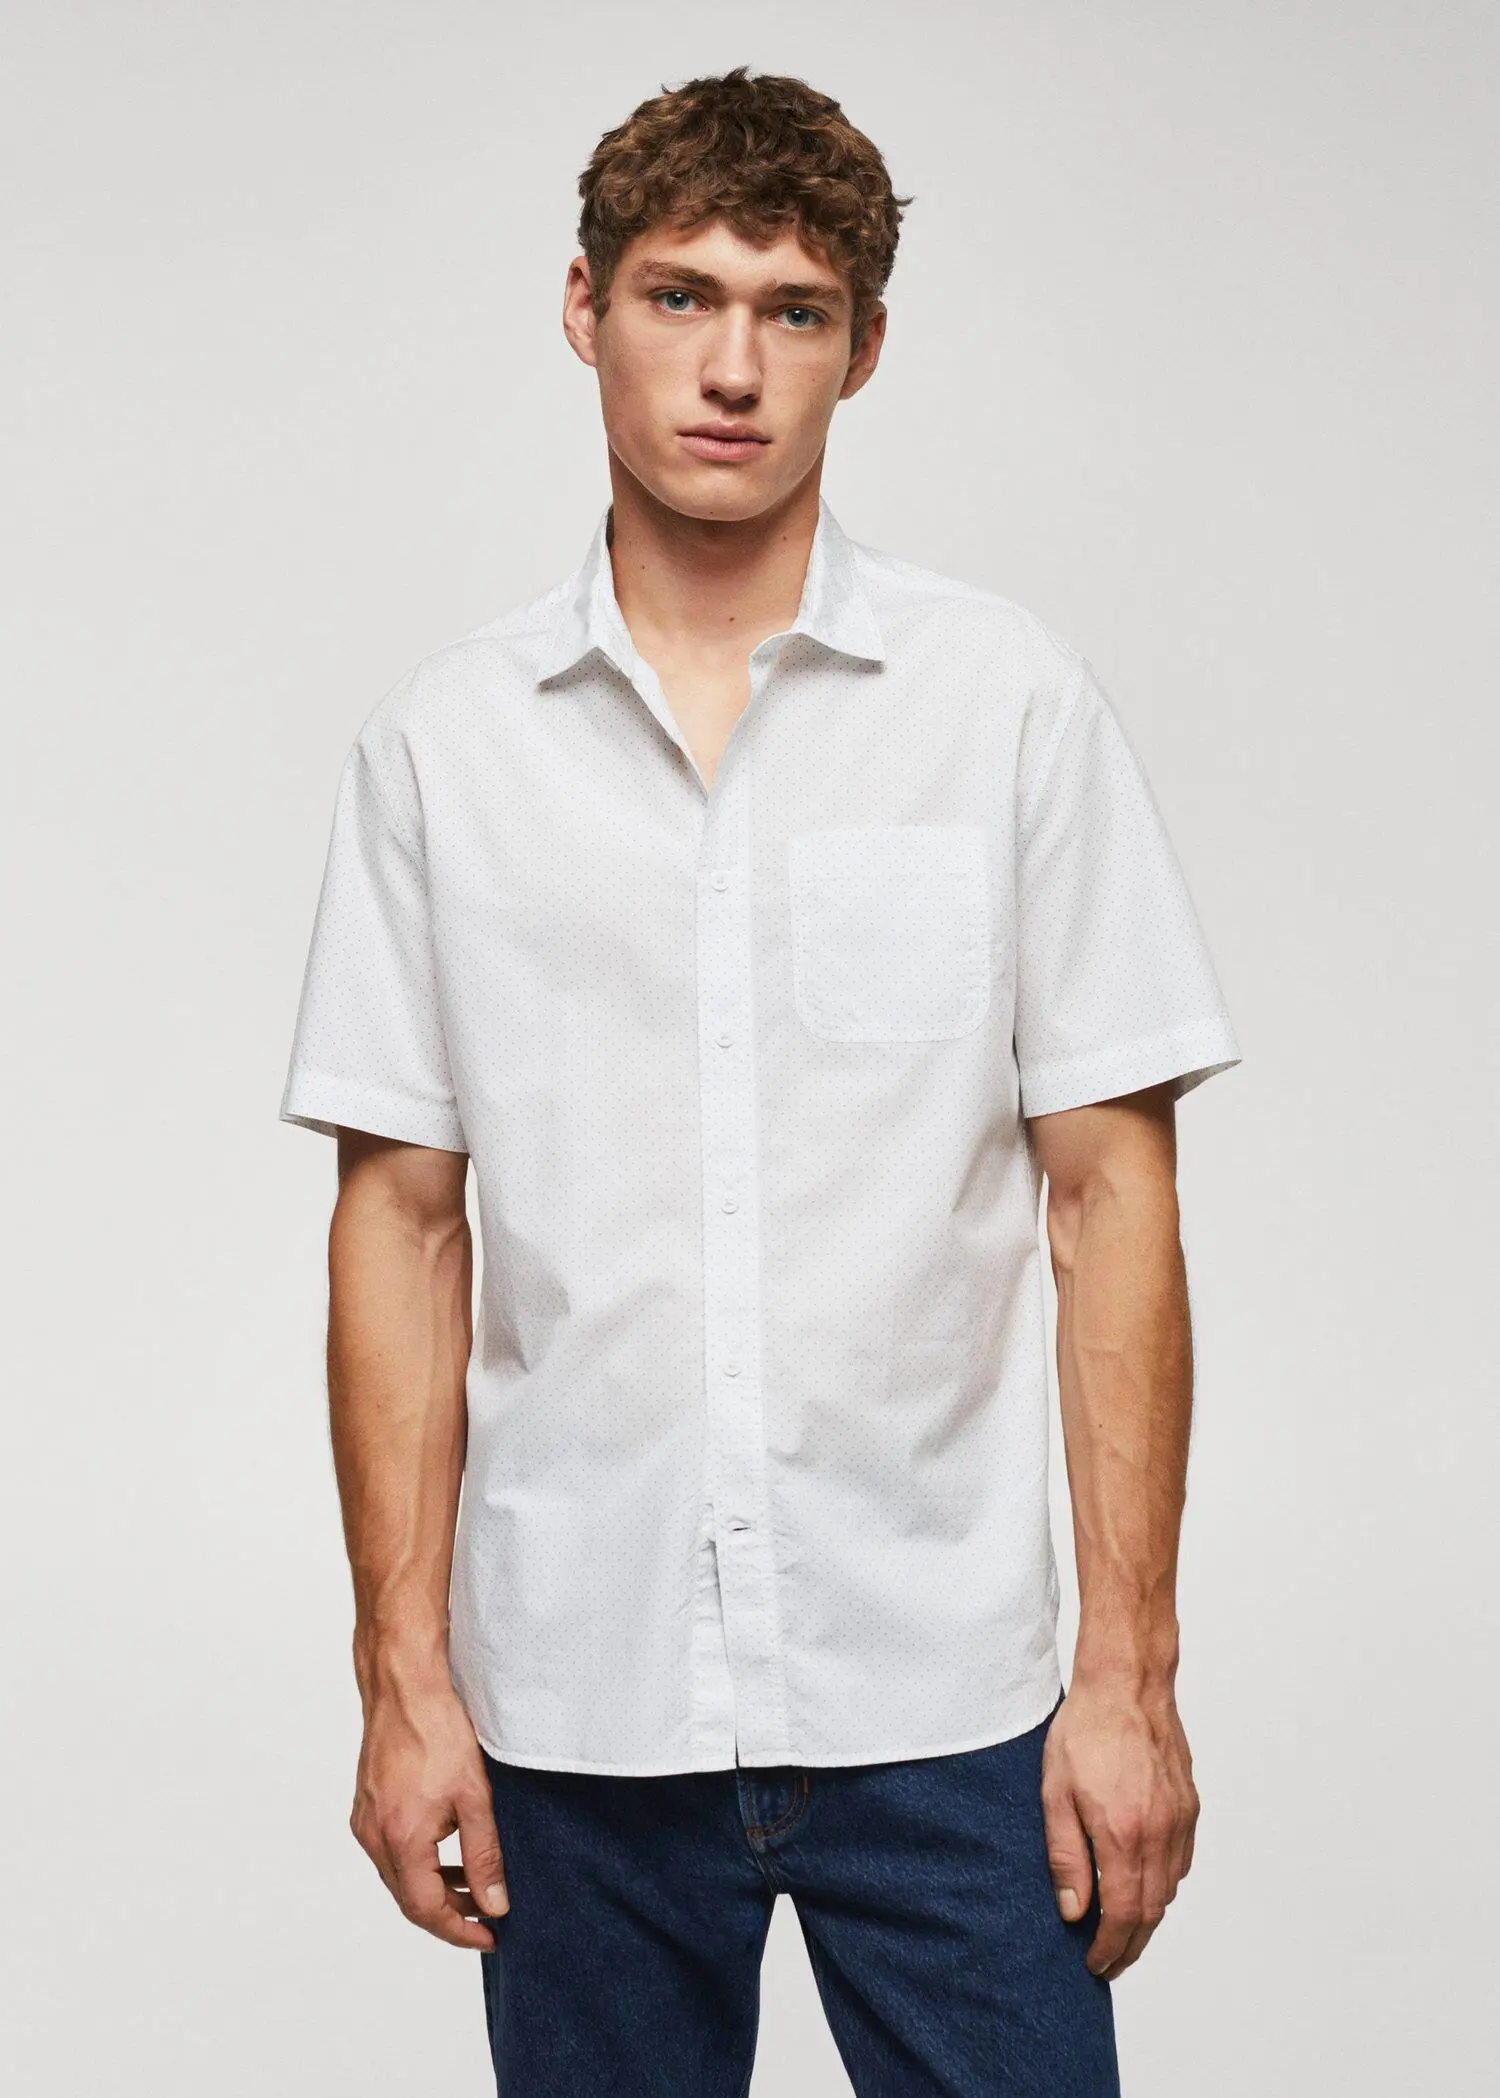 Mango 100% cotton short-sleeved mirco-patterned shirt. 1